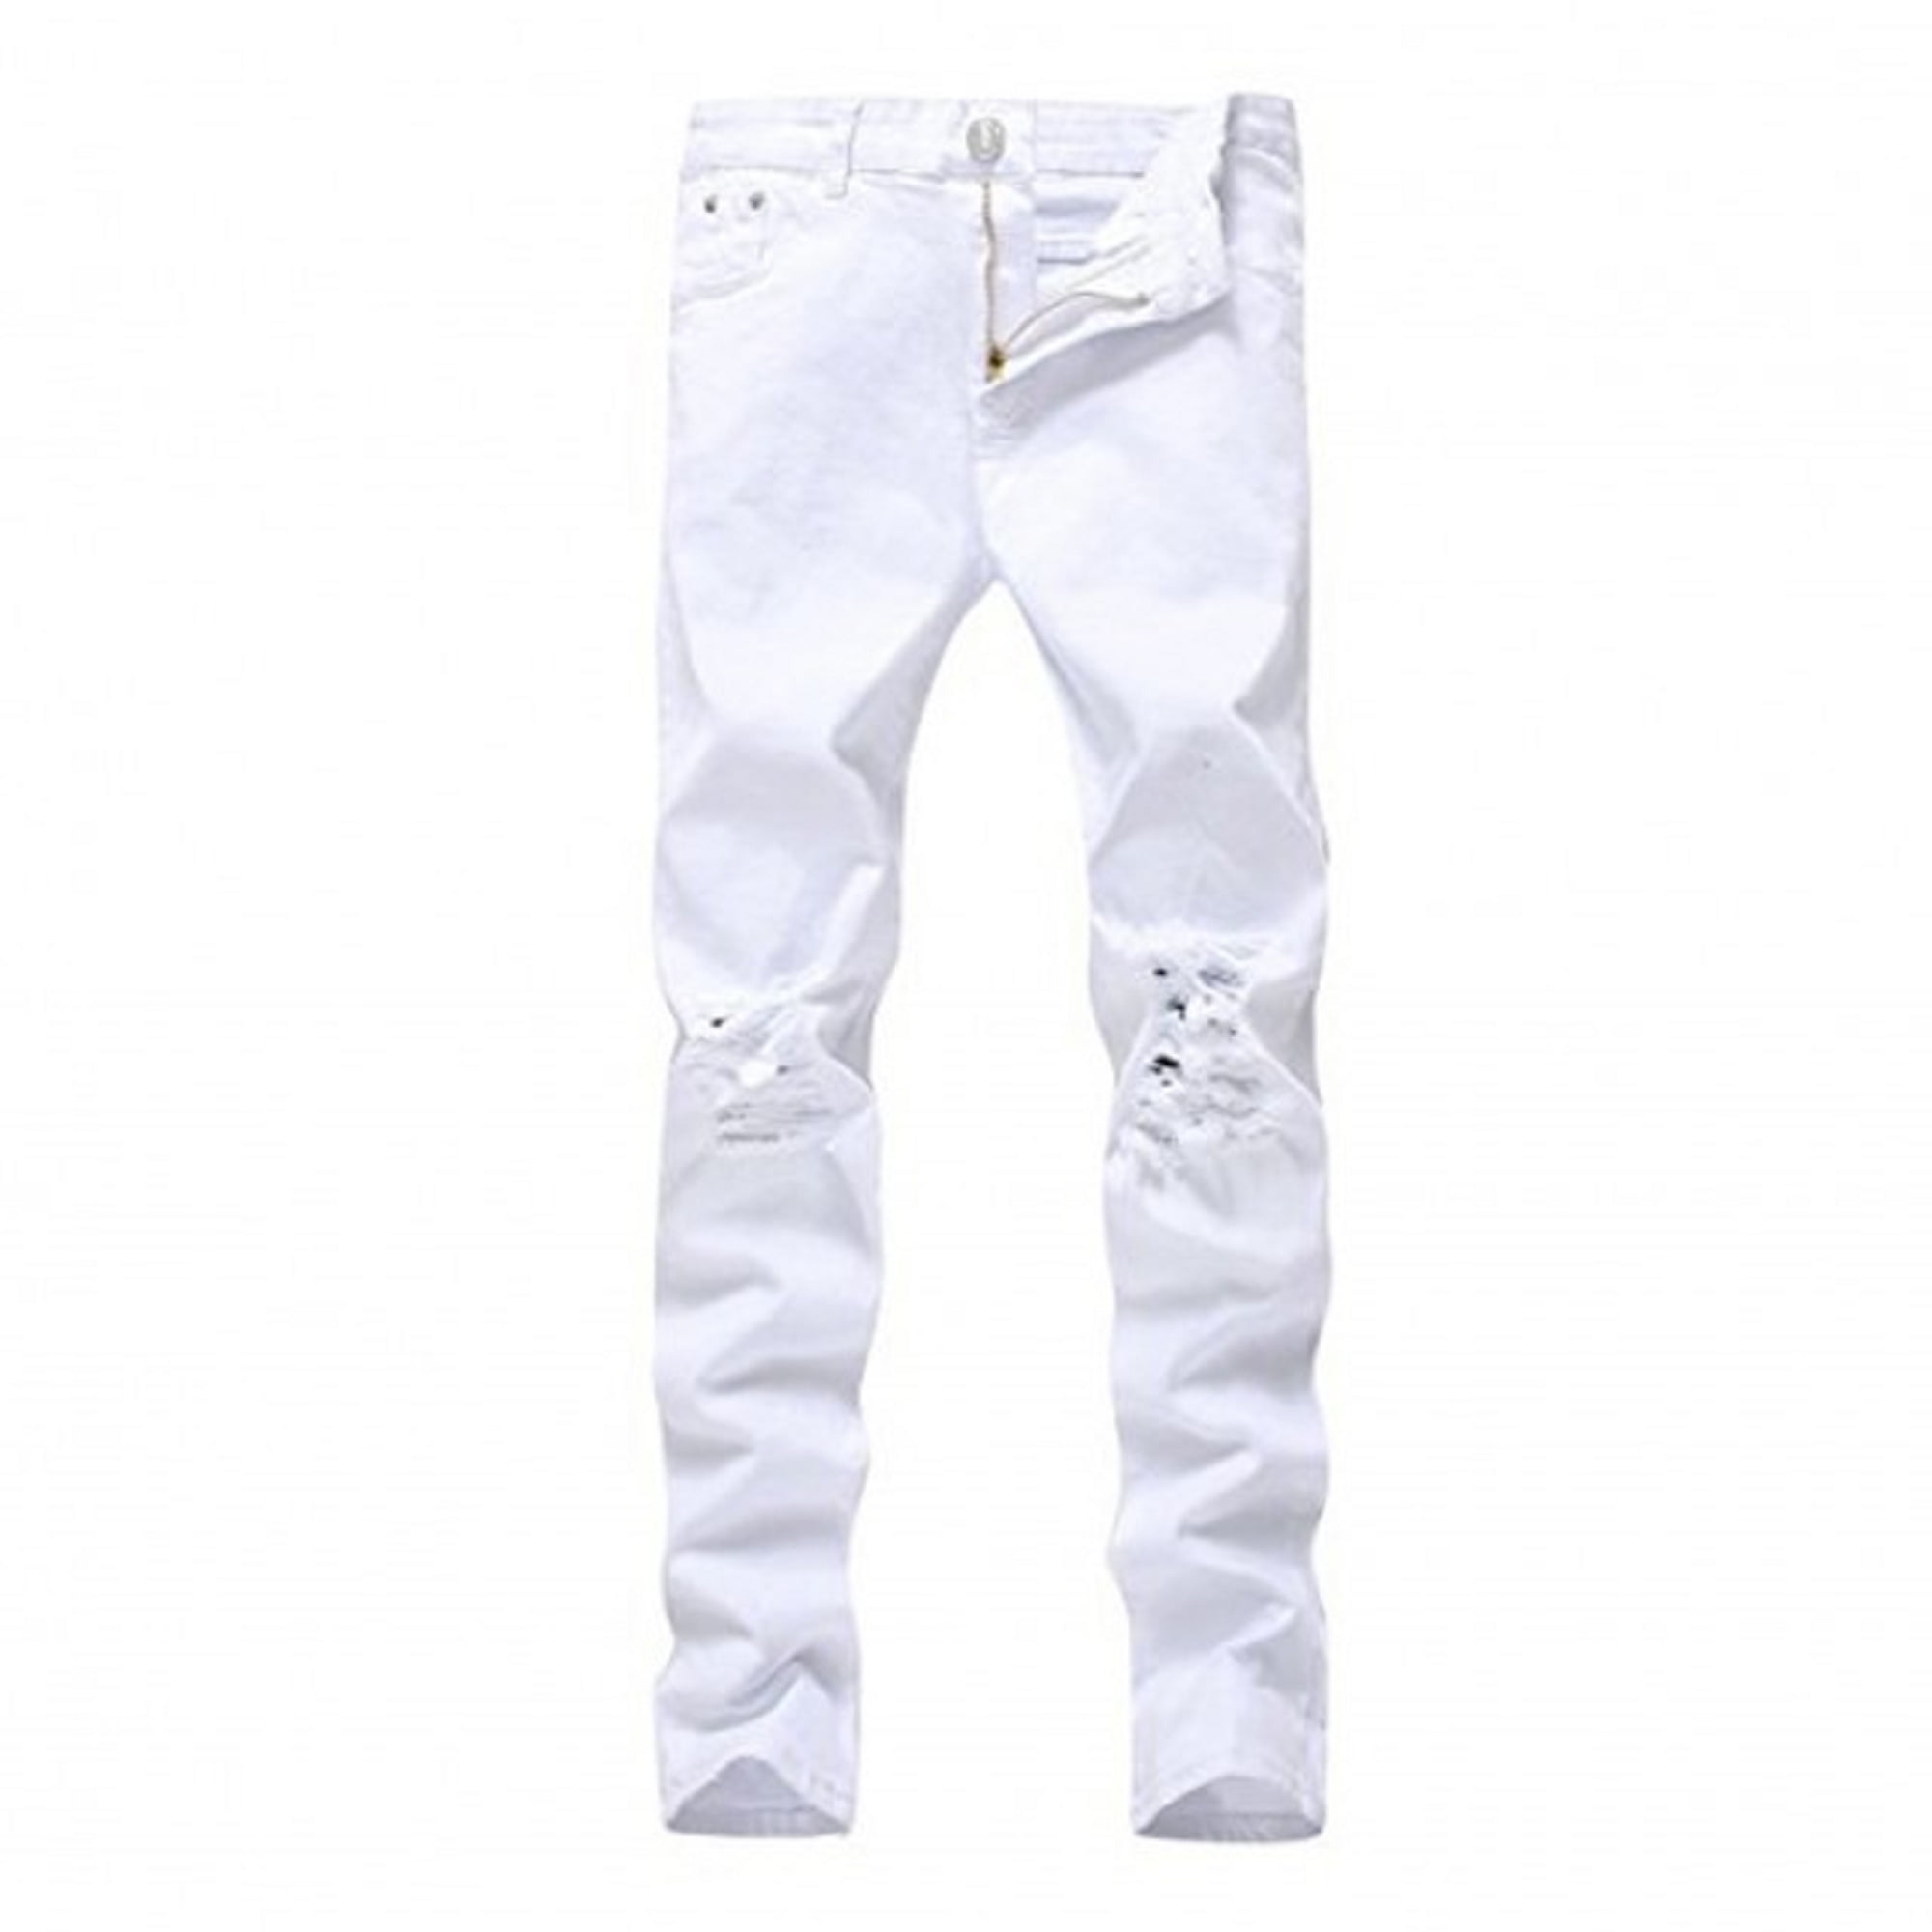 white jean for kids